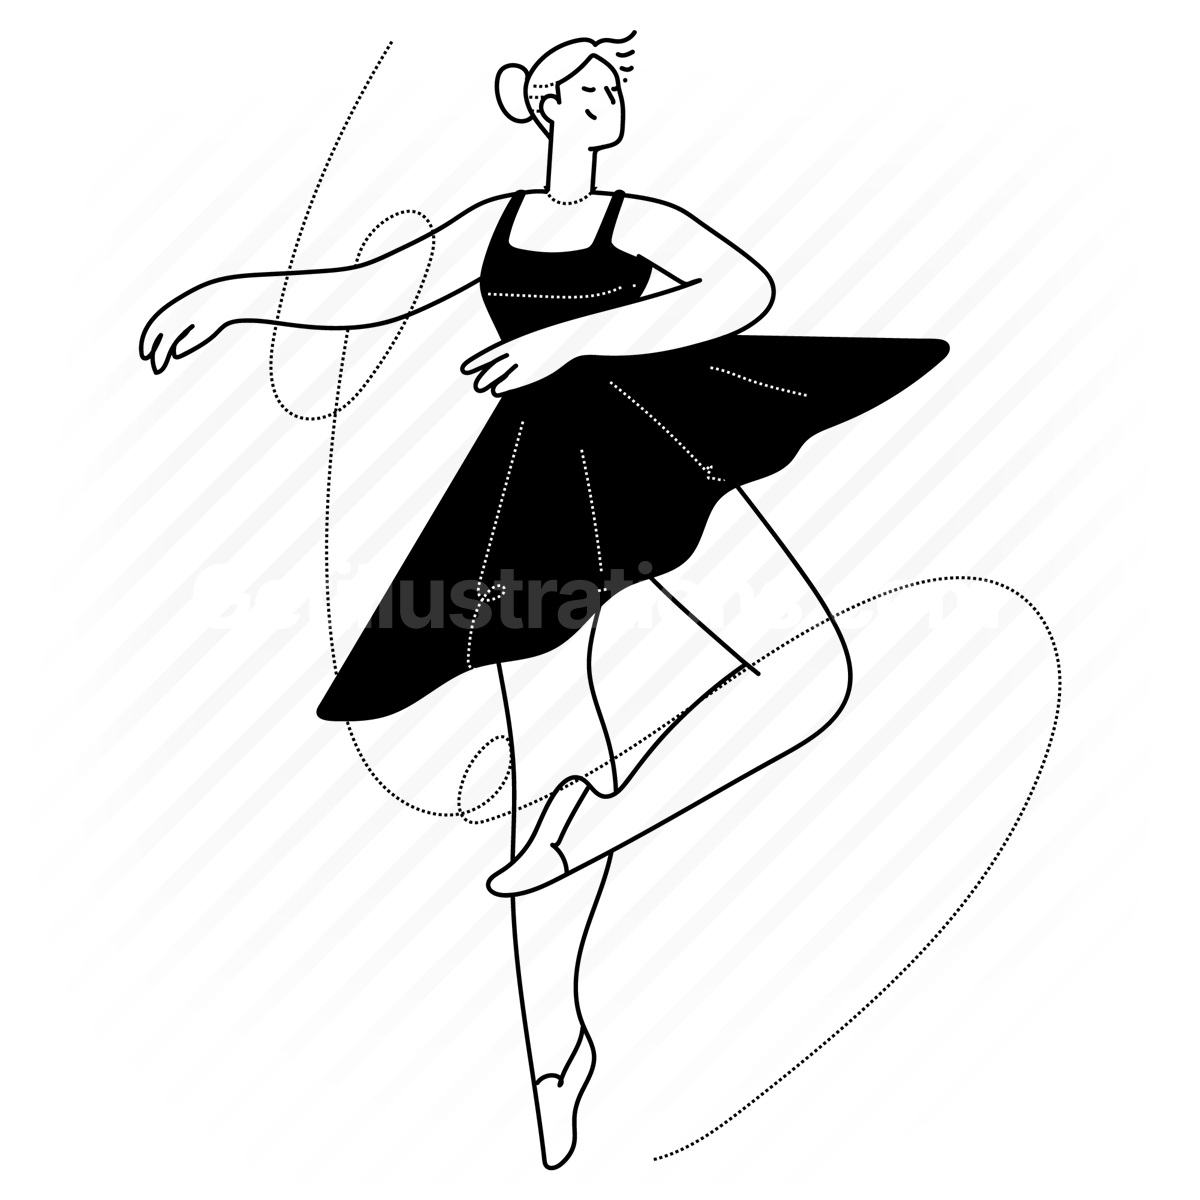 movement, motion, ballerina, dancer, dancing, woman, people, person